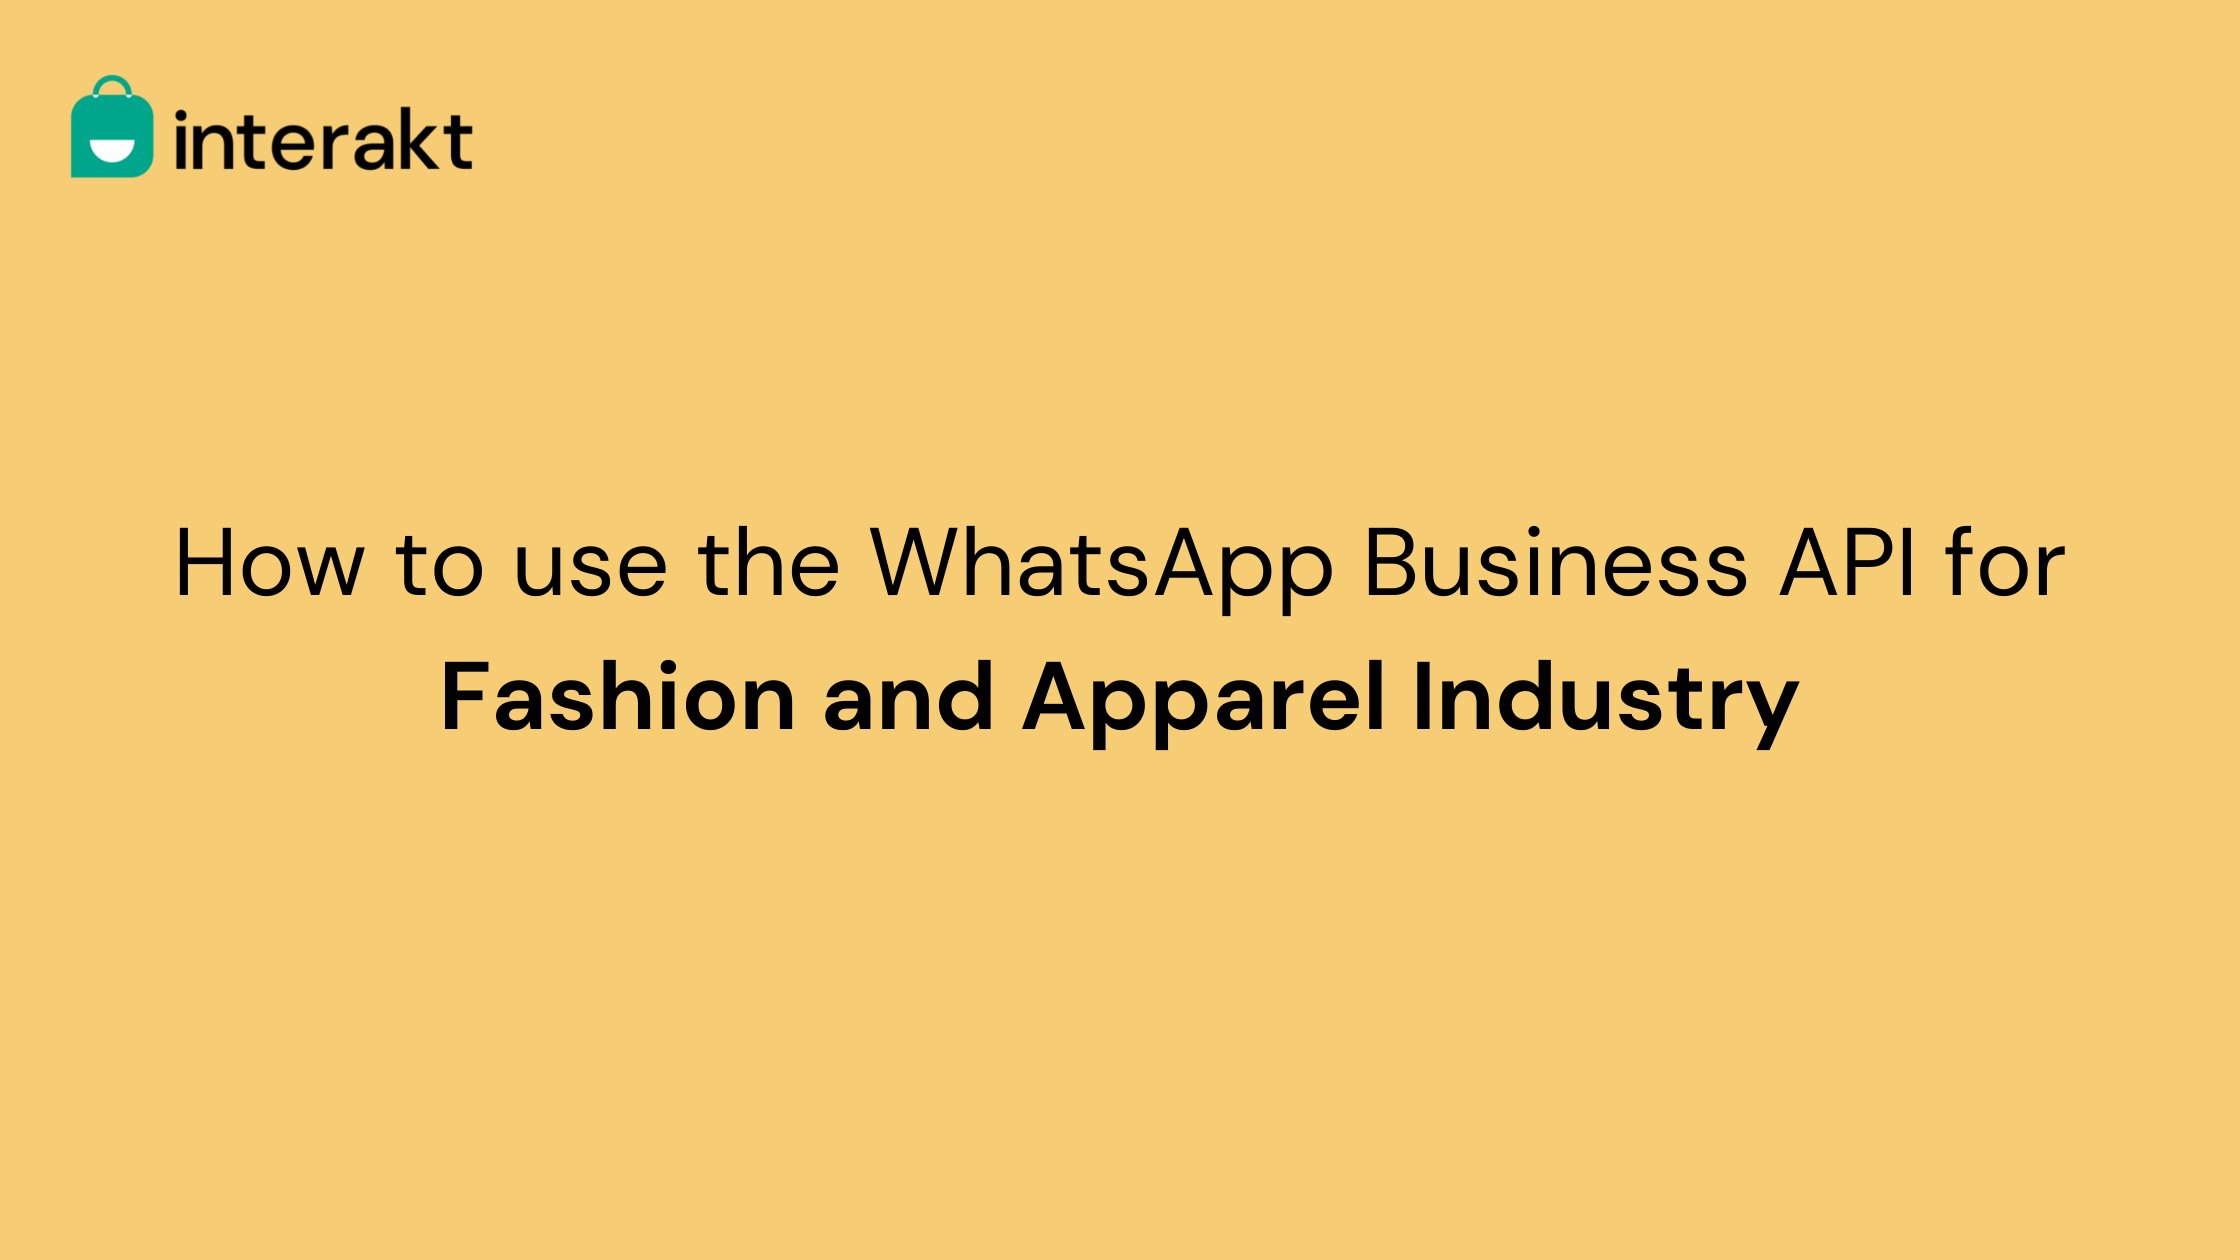 How to use WhatsApp Business API